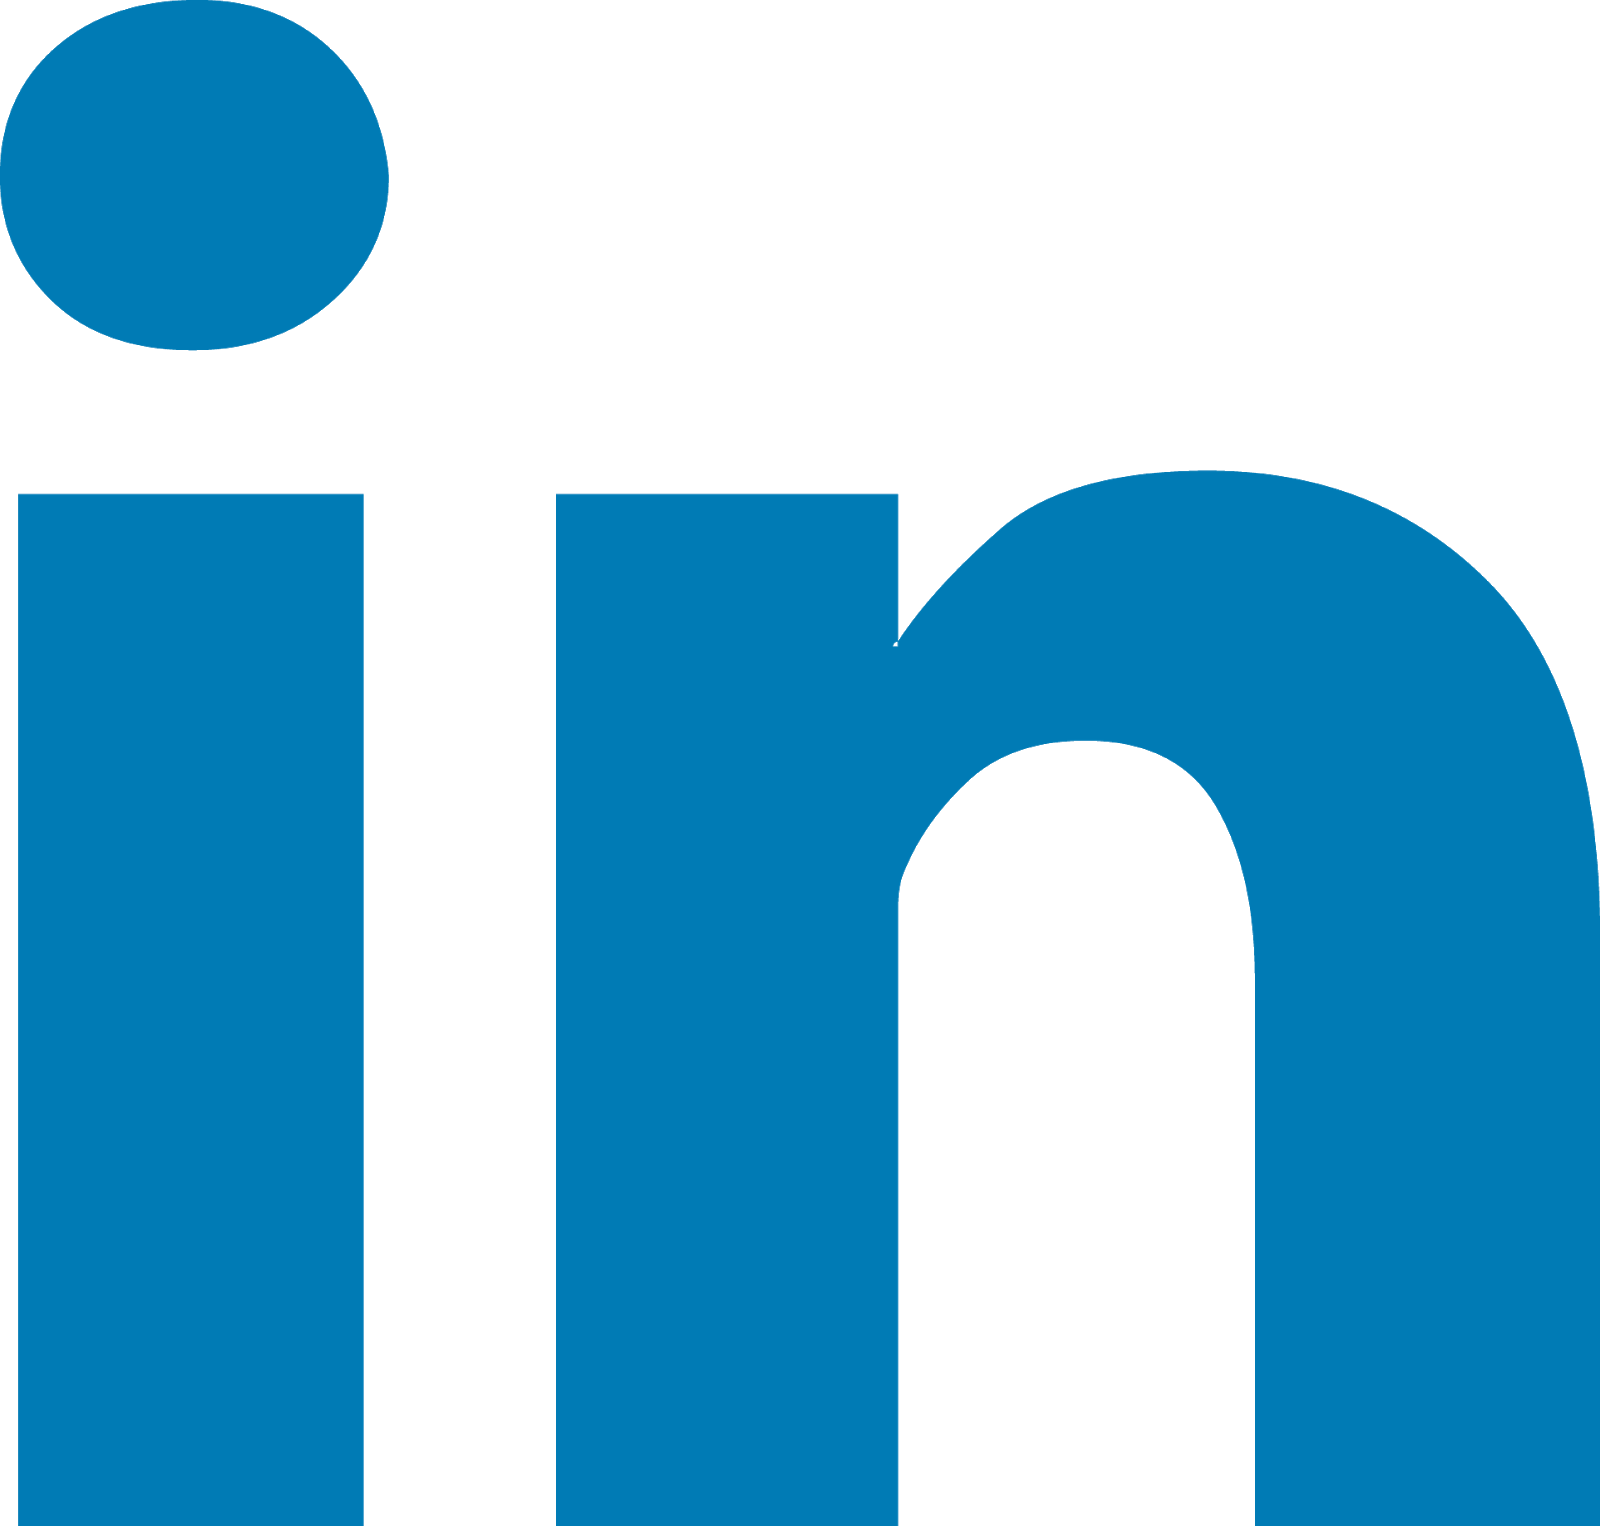 Linkedin logo vector white - rasprocess